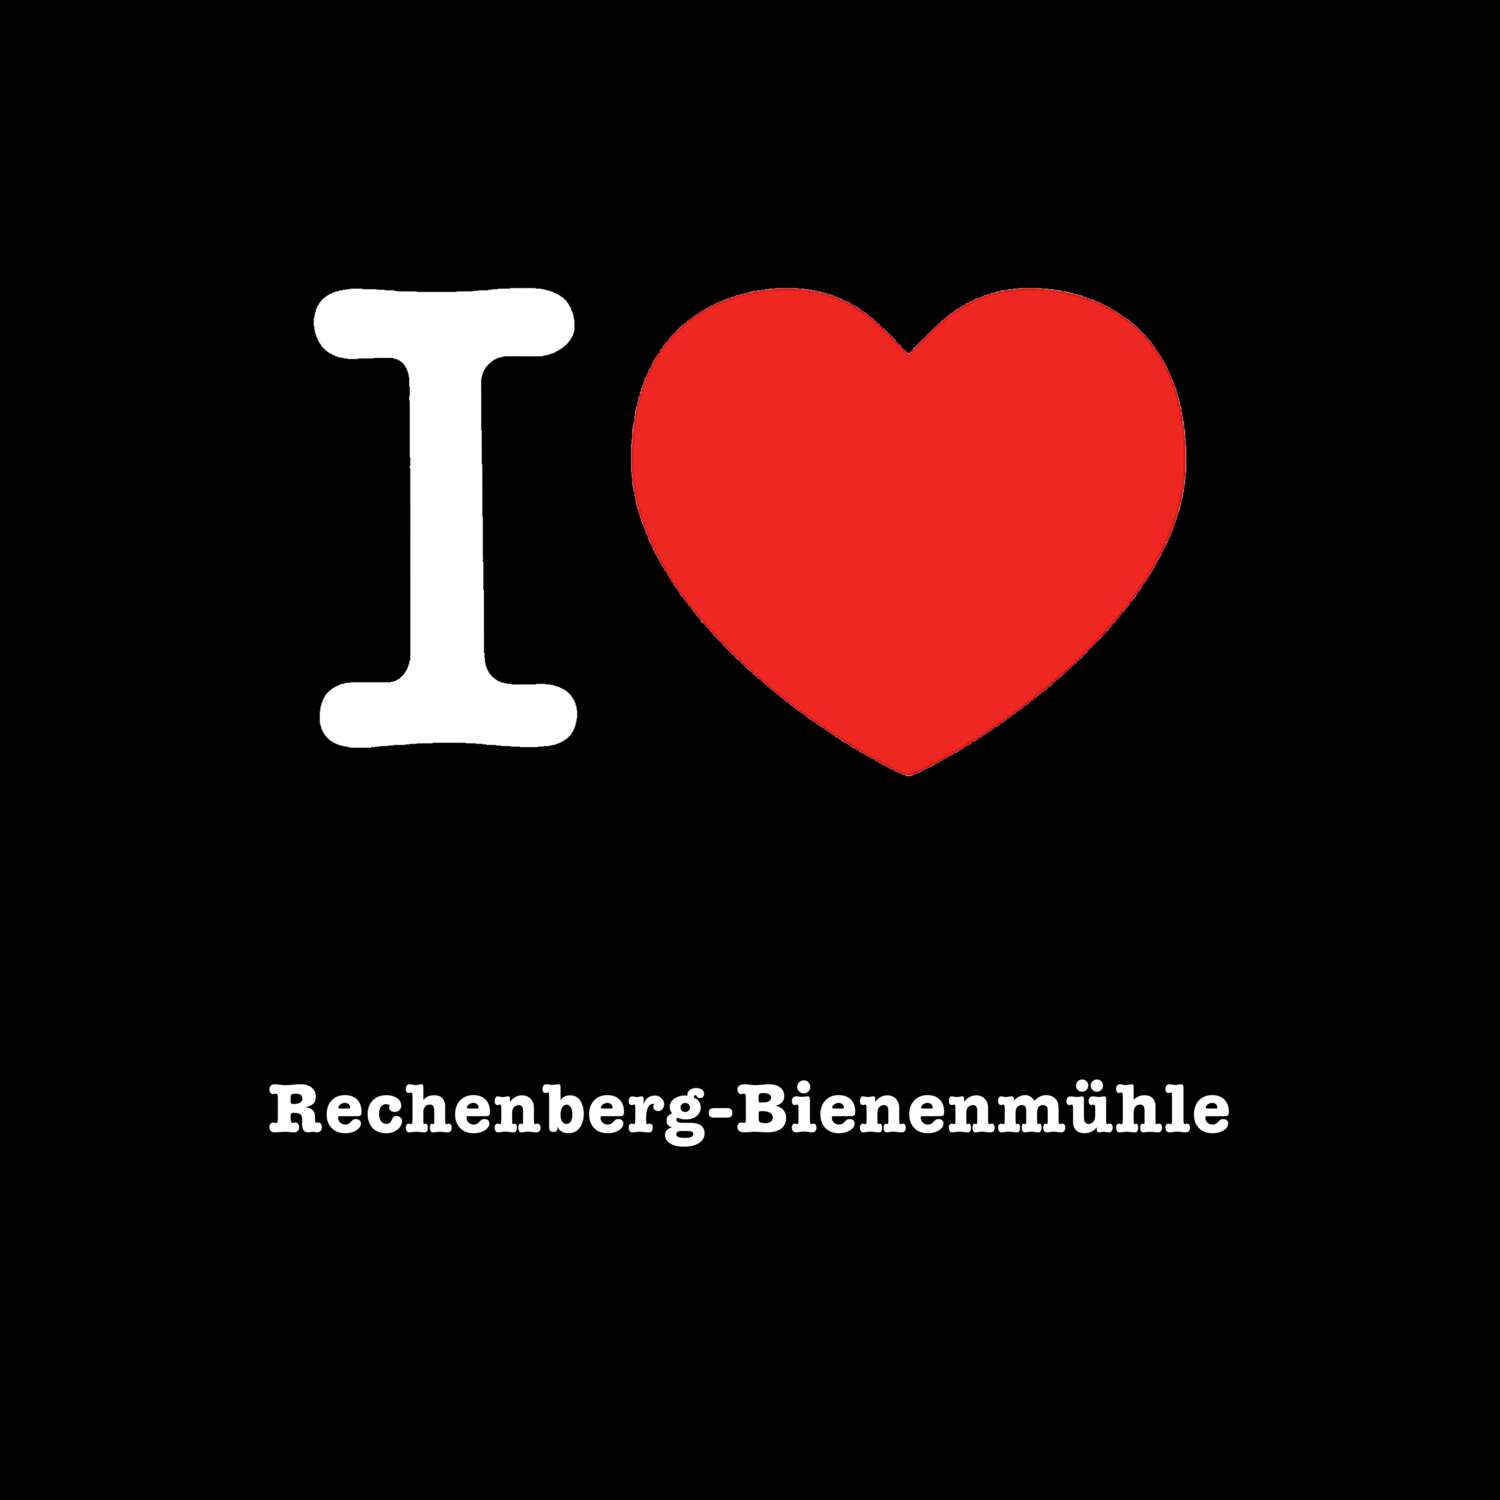 Rechenberg-Bienenmühle T-Shirt »I love«